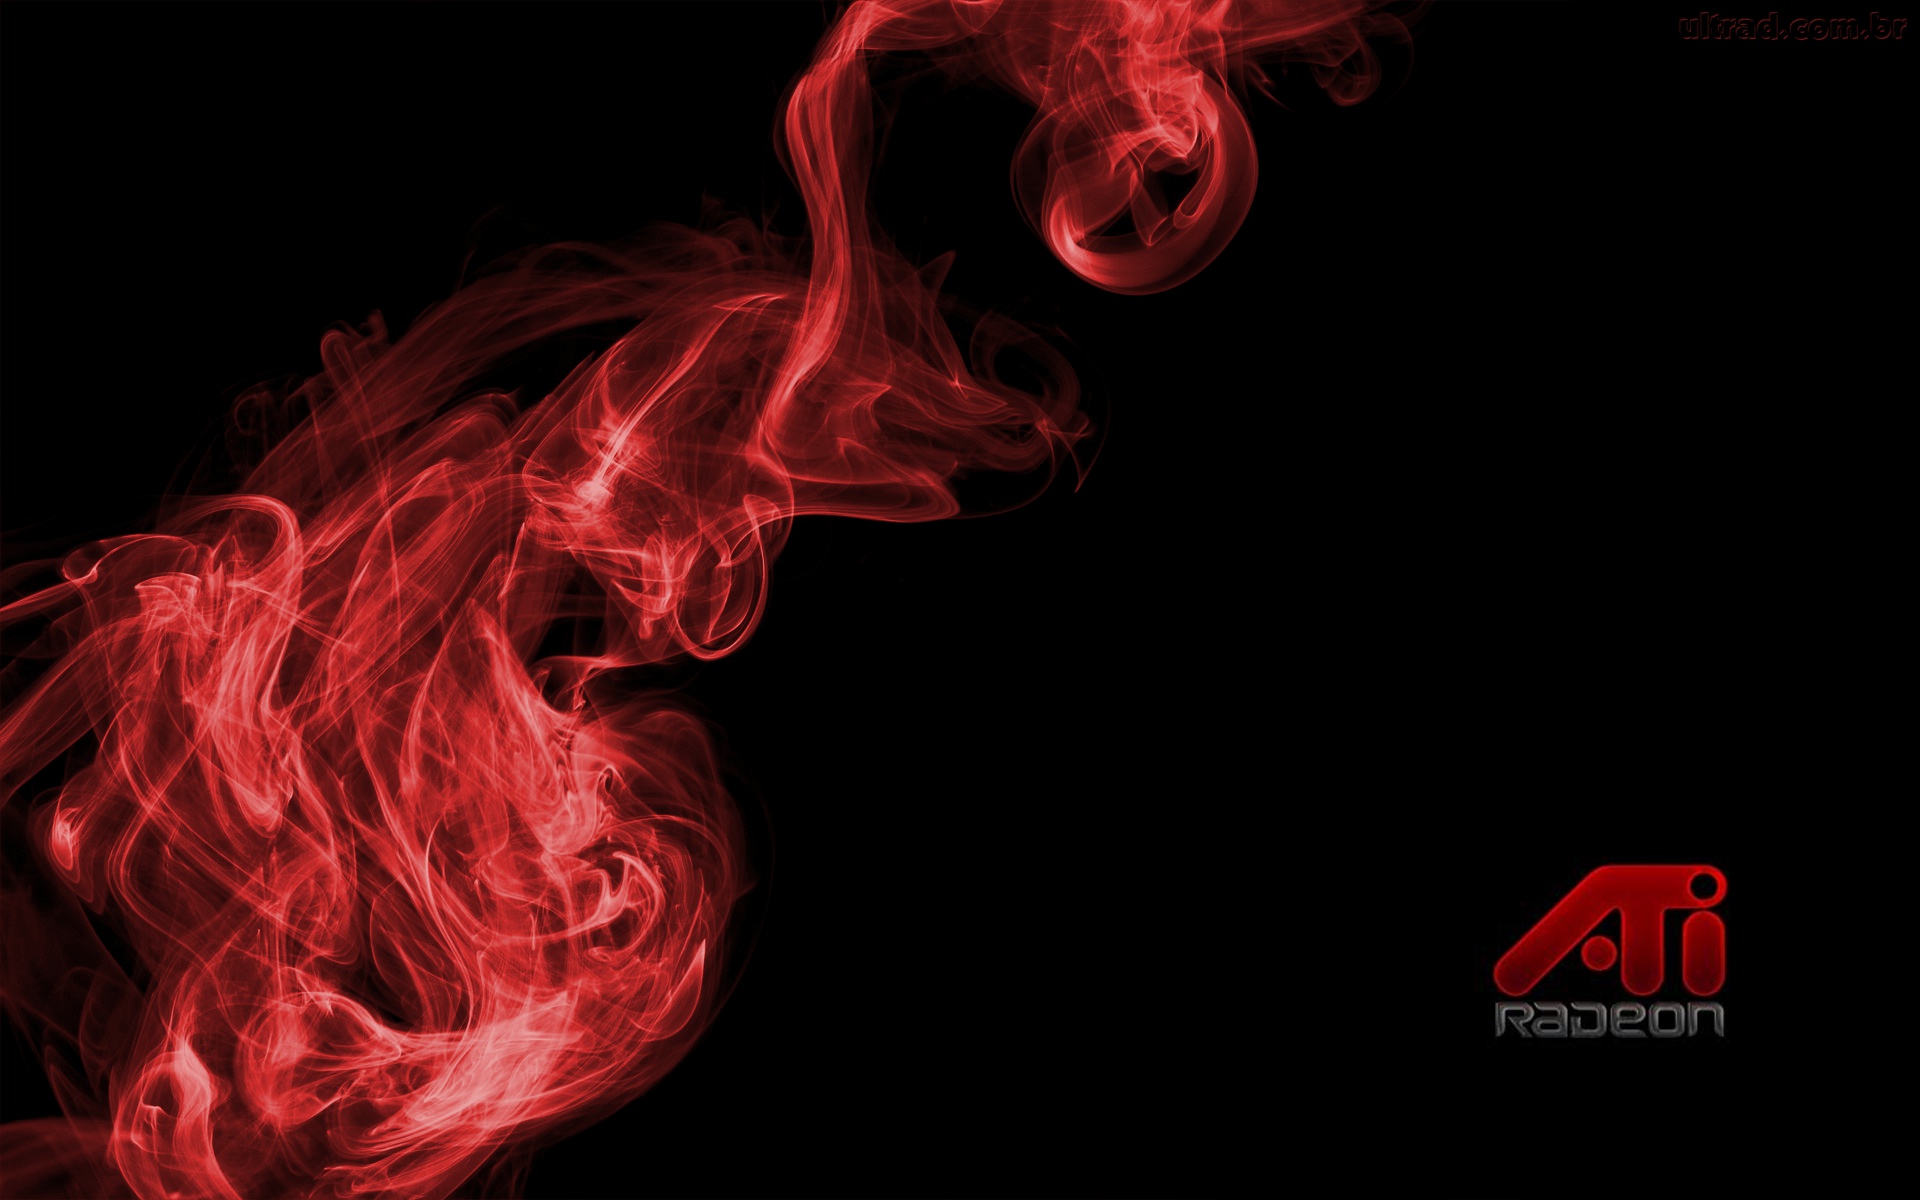 Ati Radeon Red Smoke Wallpaper